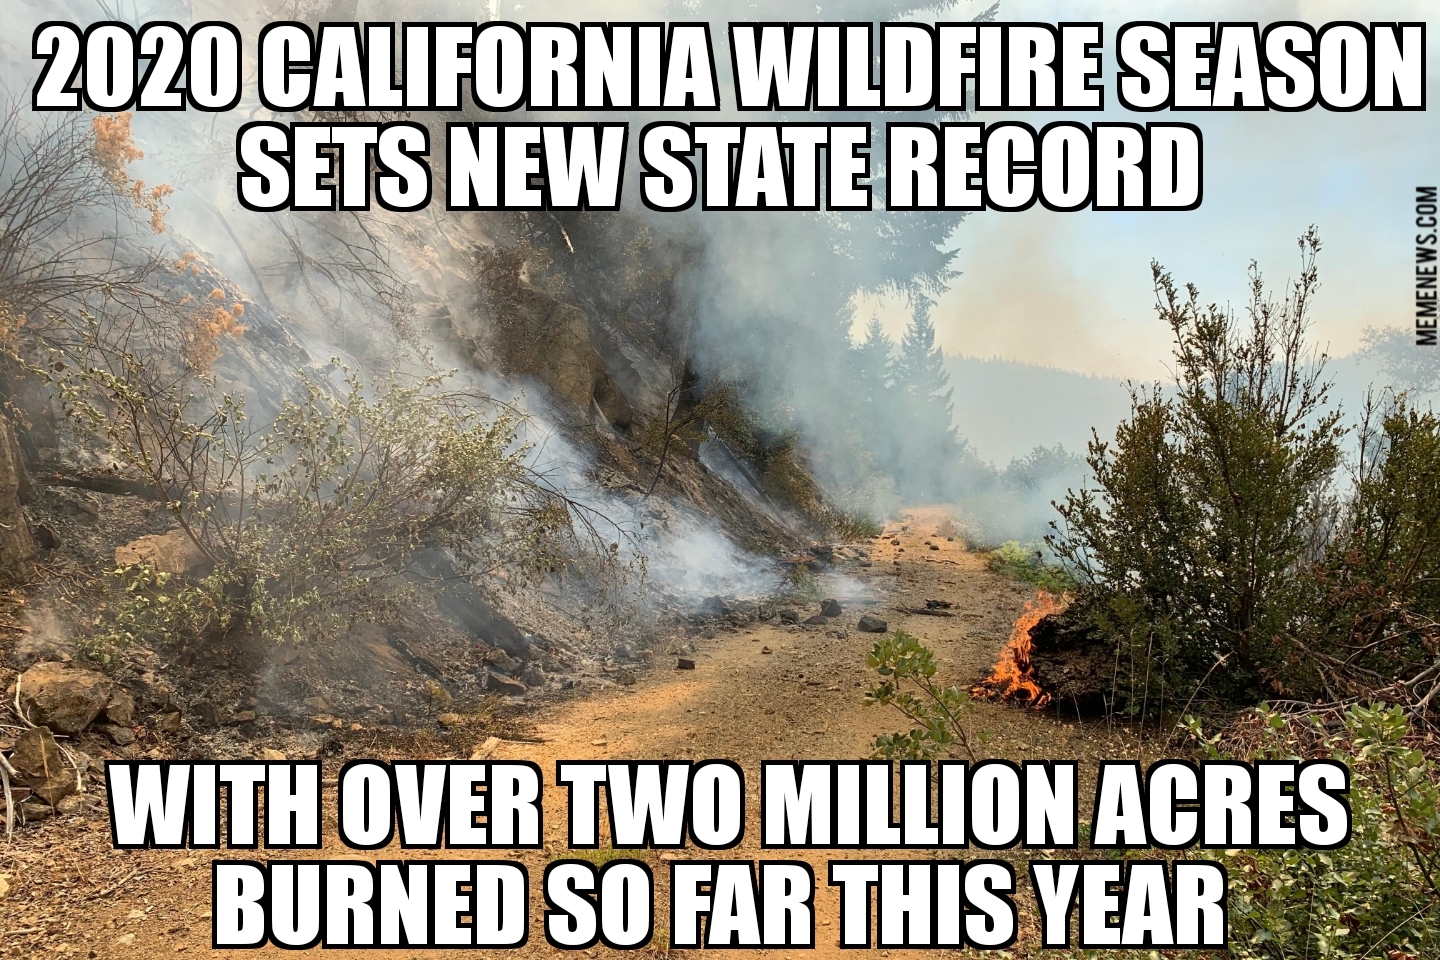 California wildfire season sets new record